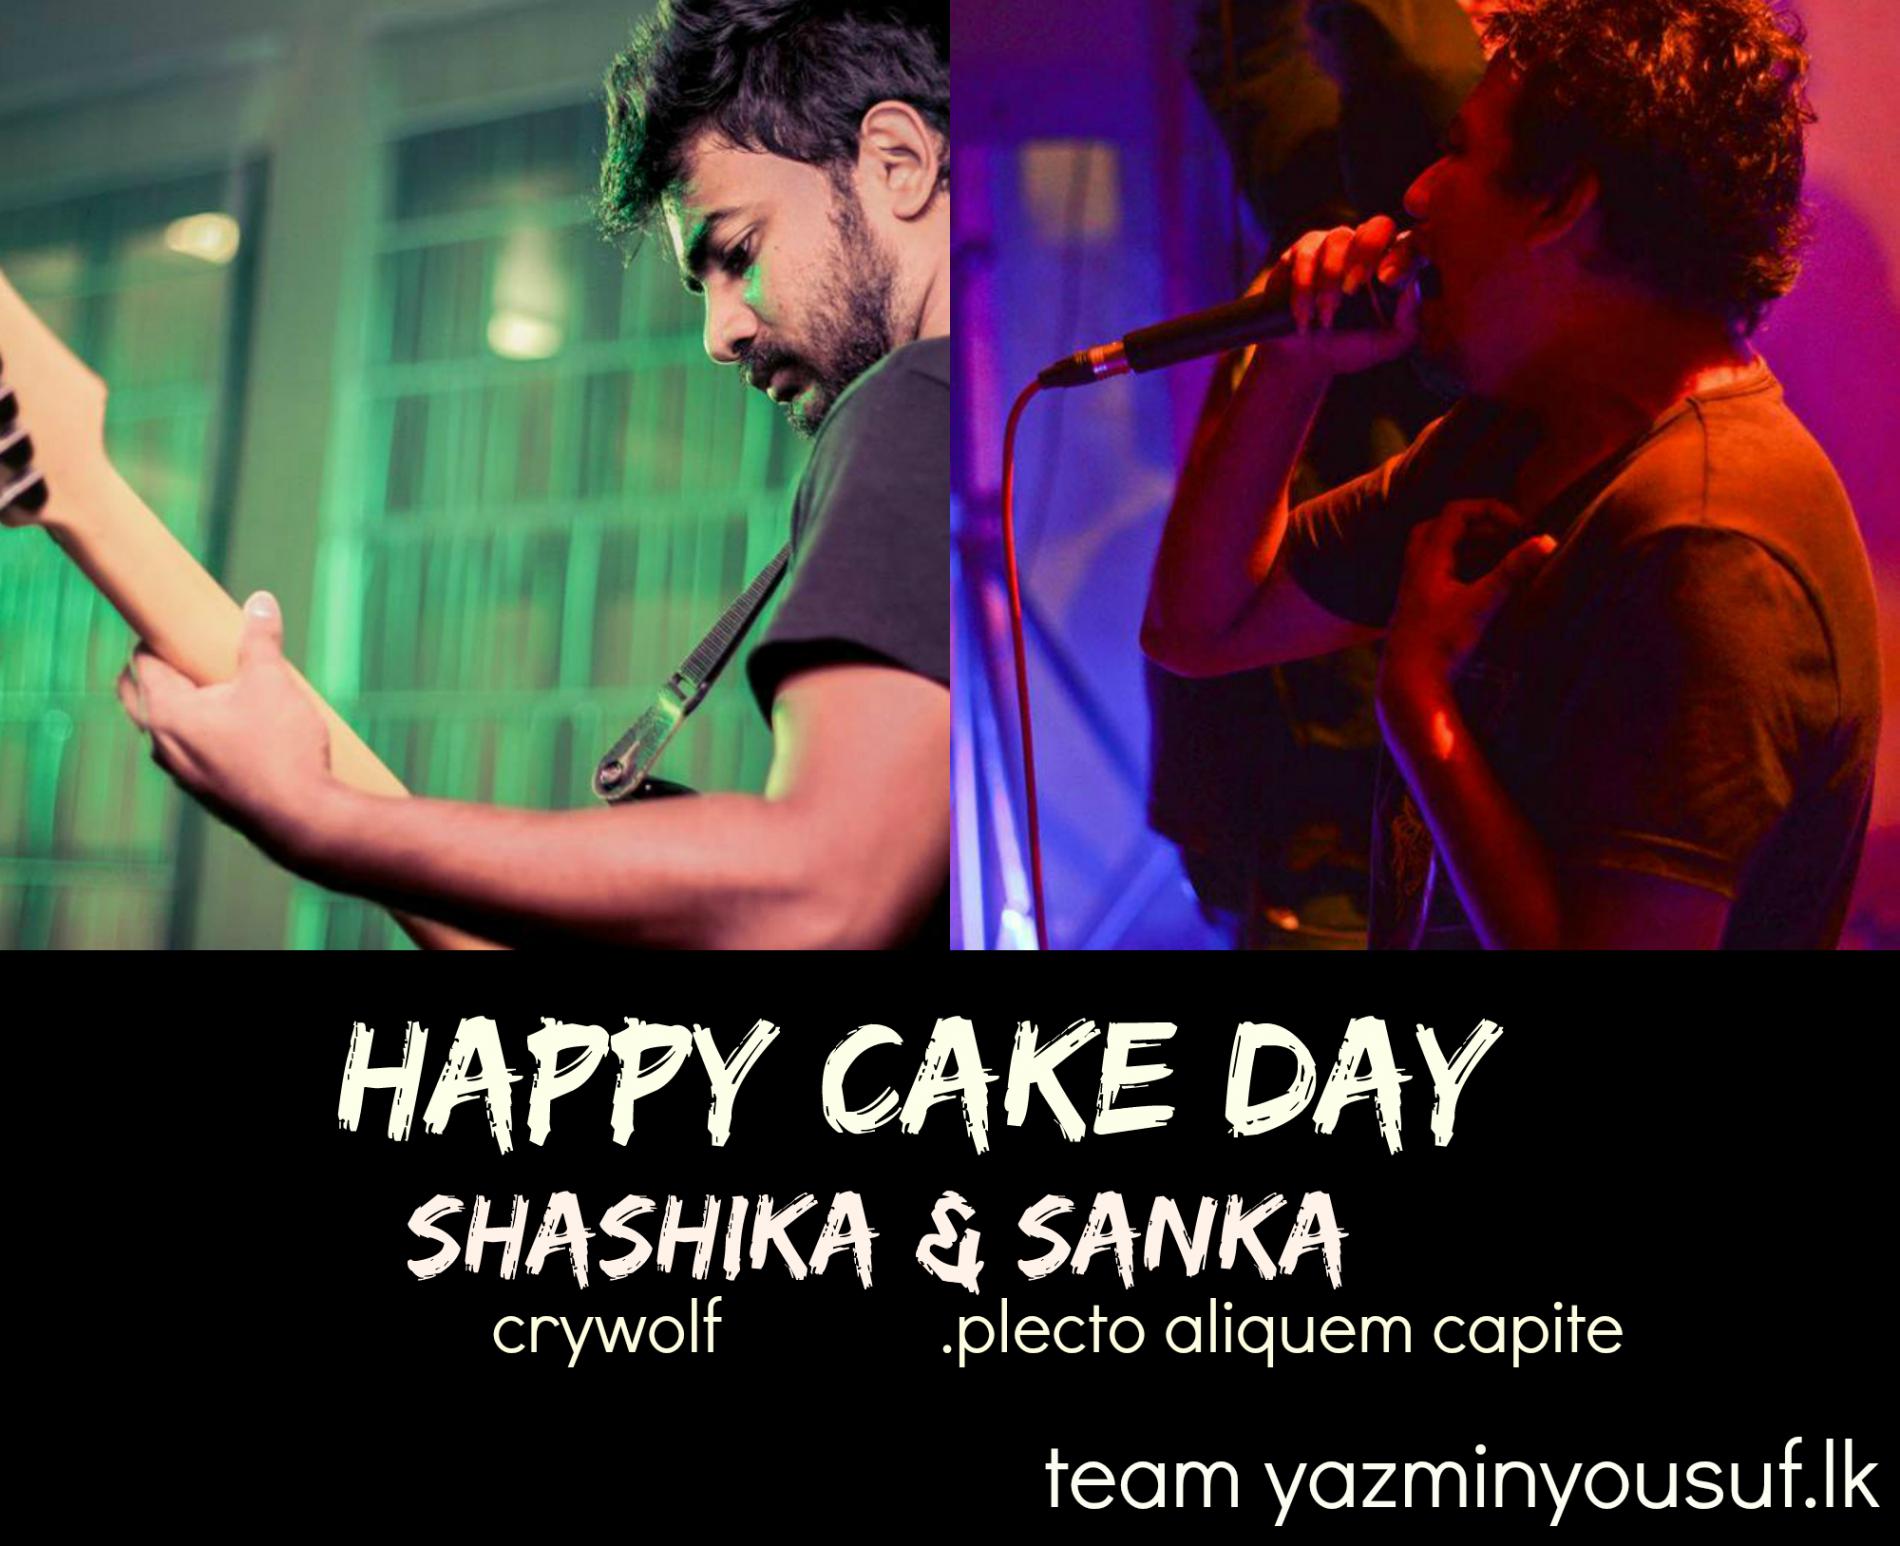 Happy Cake Day To Shashika & Sanka